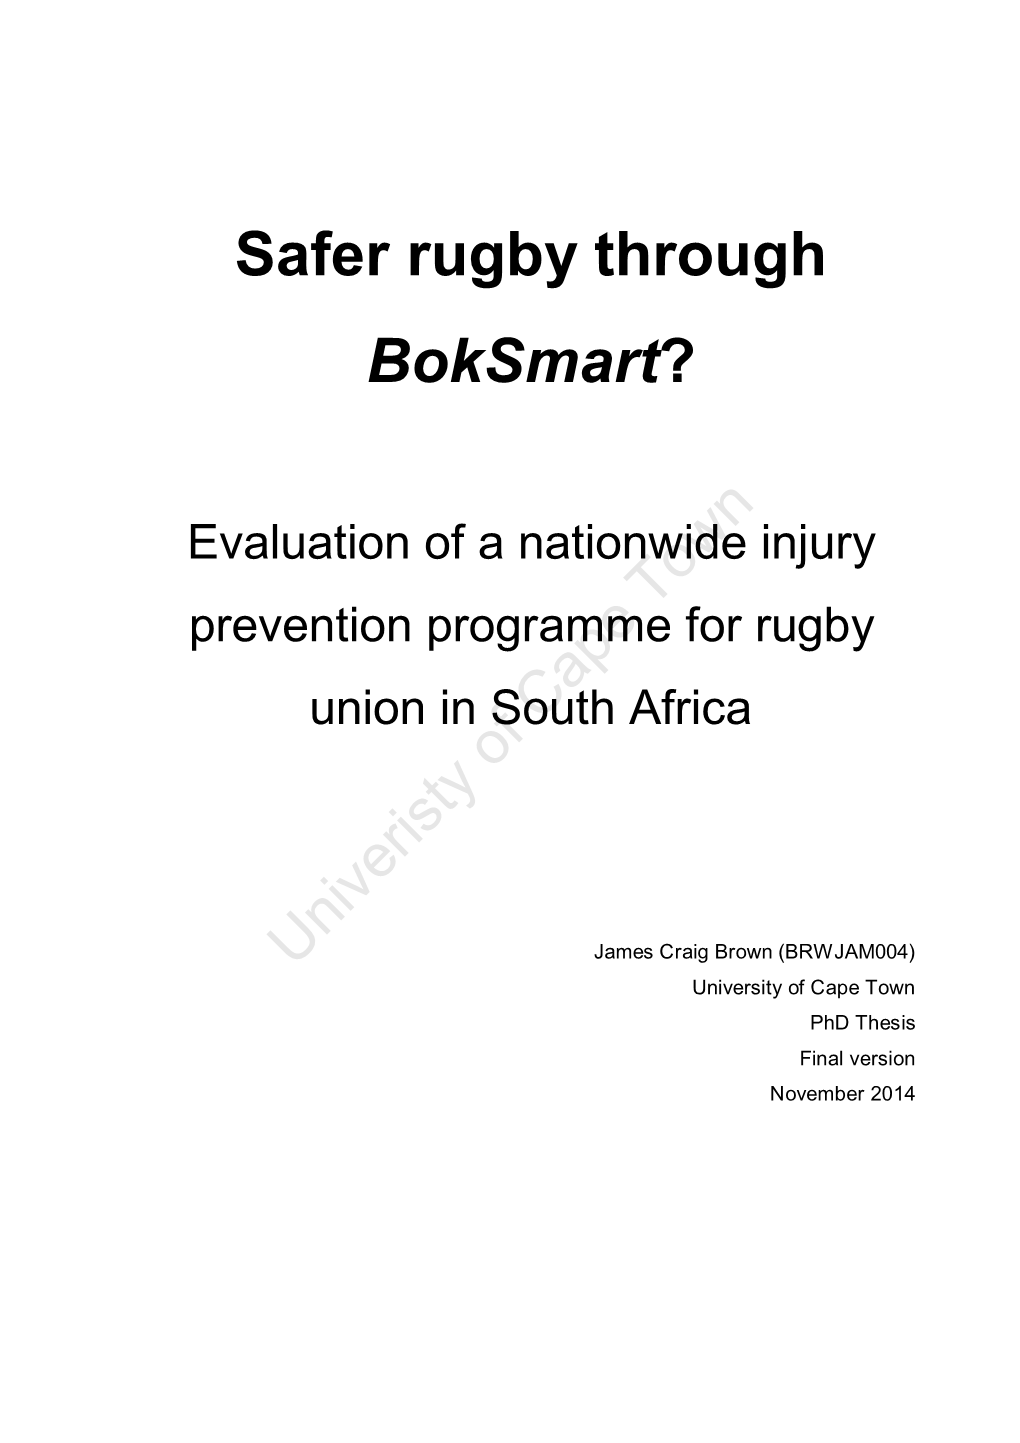 Safer Rugby Through Boksmart?